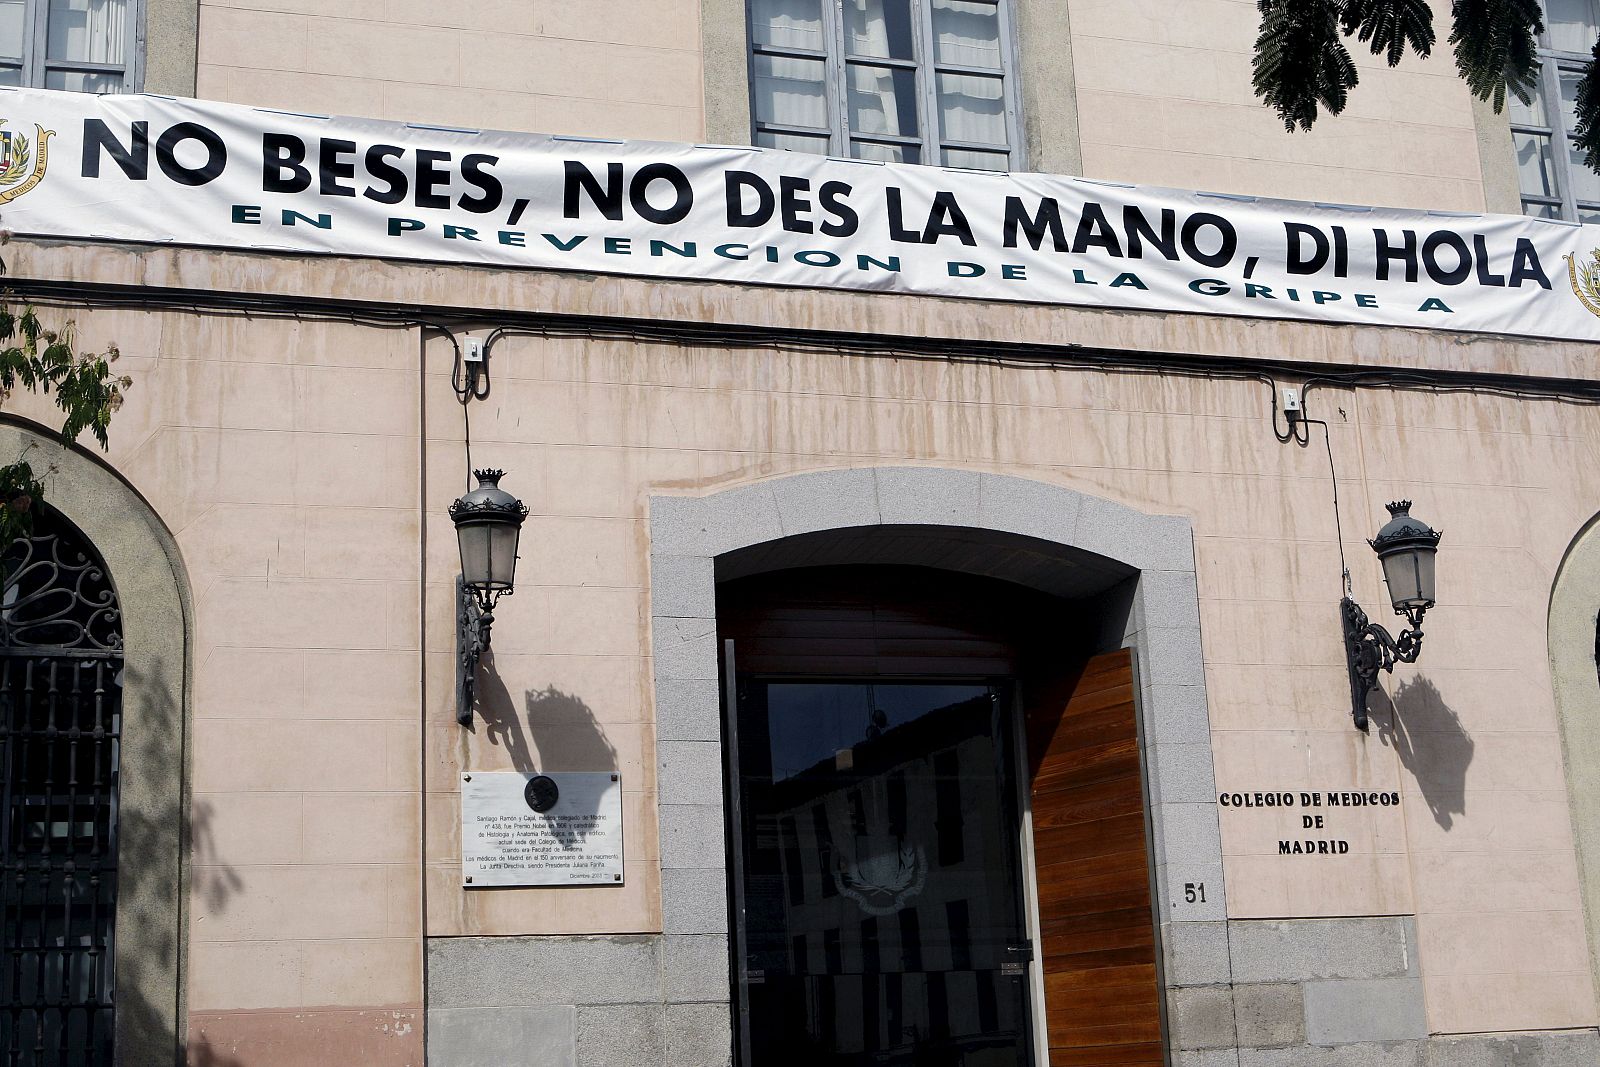 "NO BESES, NO DES LA MANO, DI HOLA"